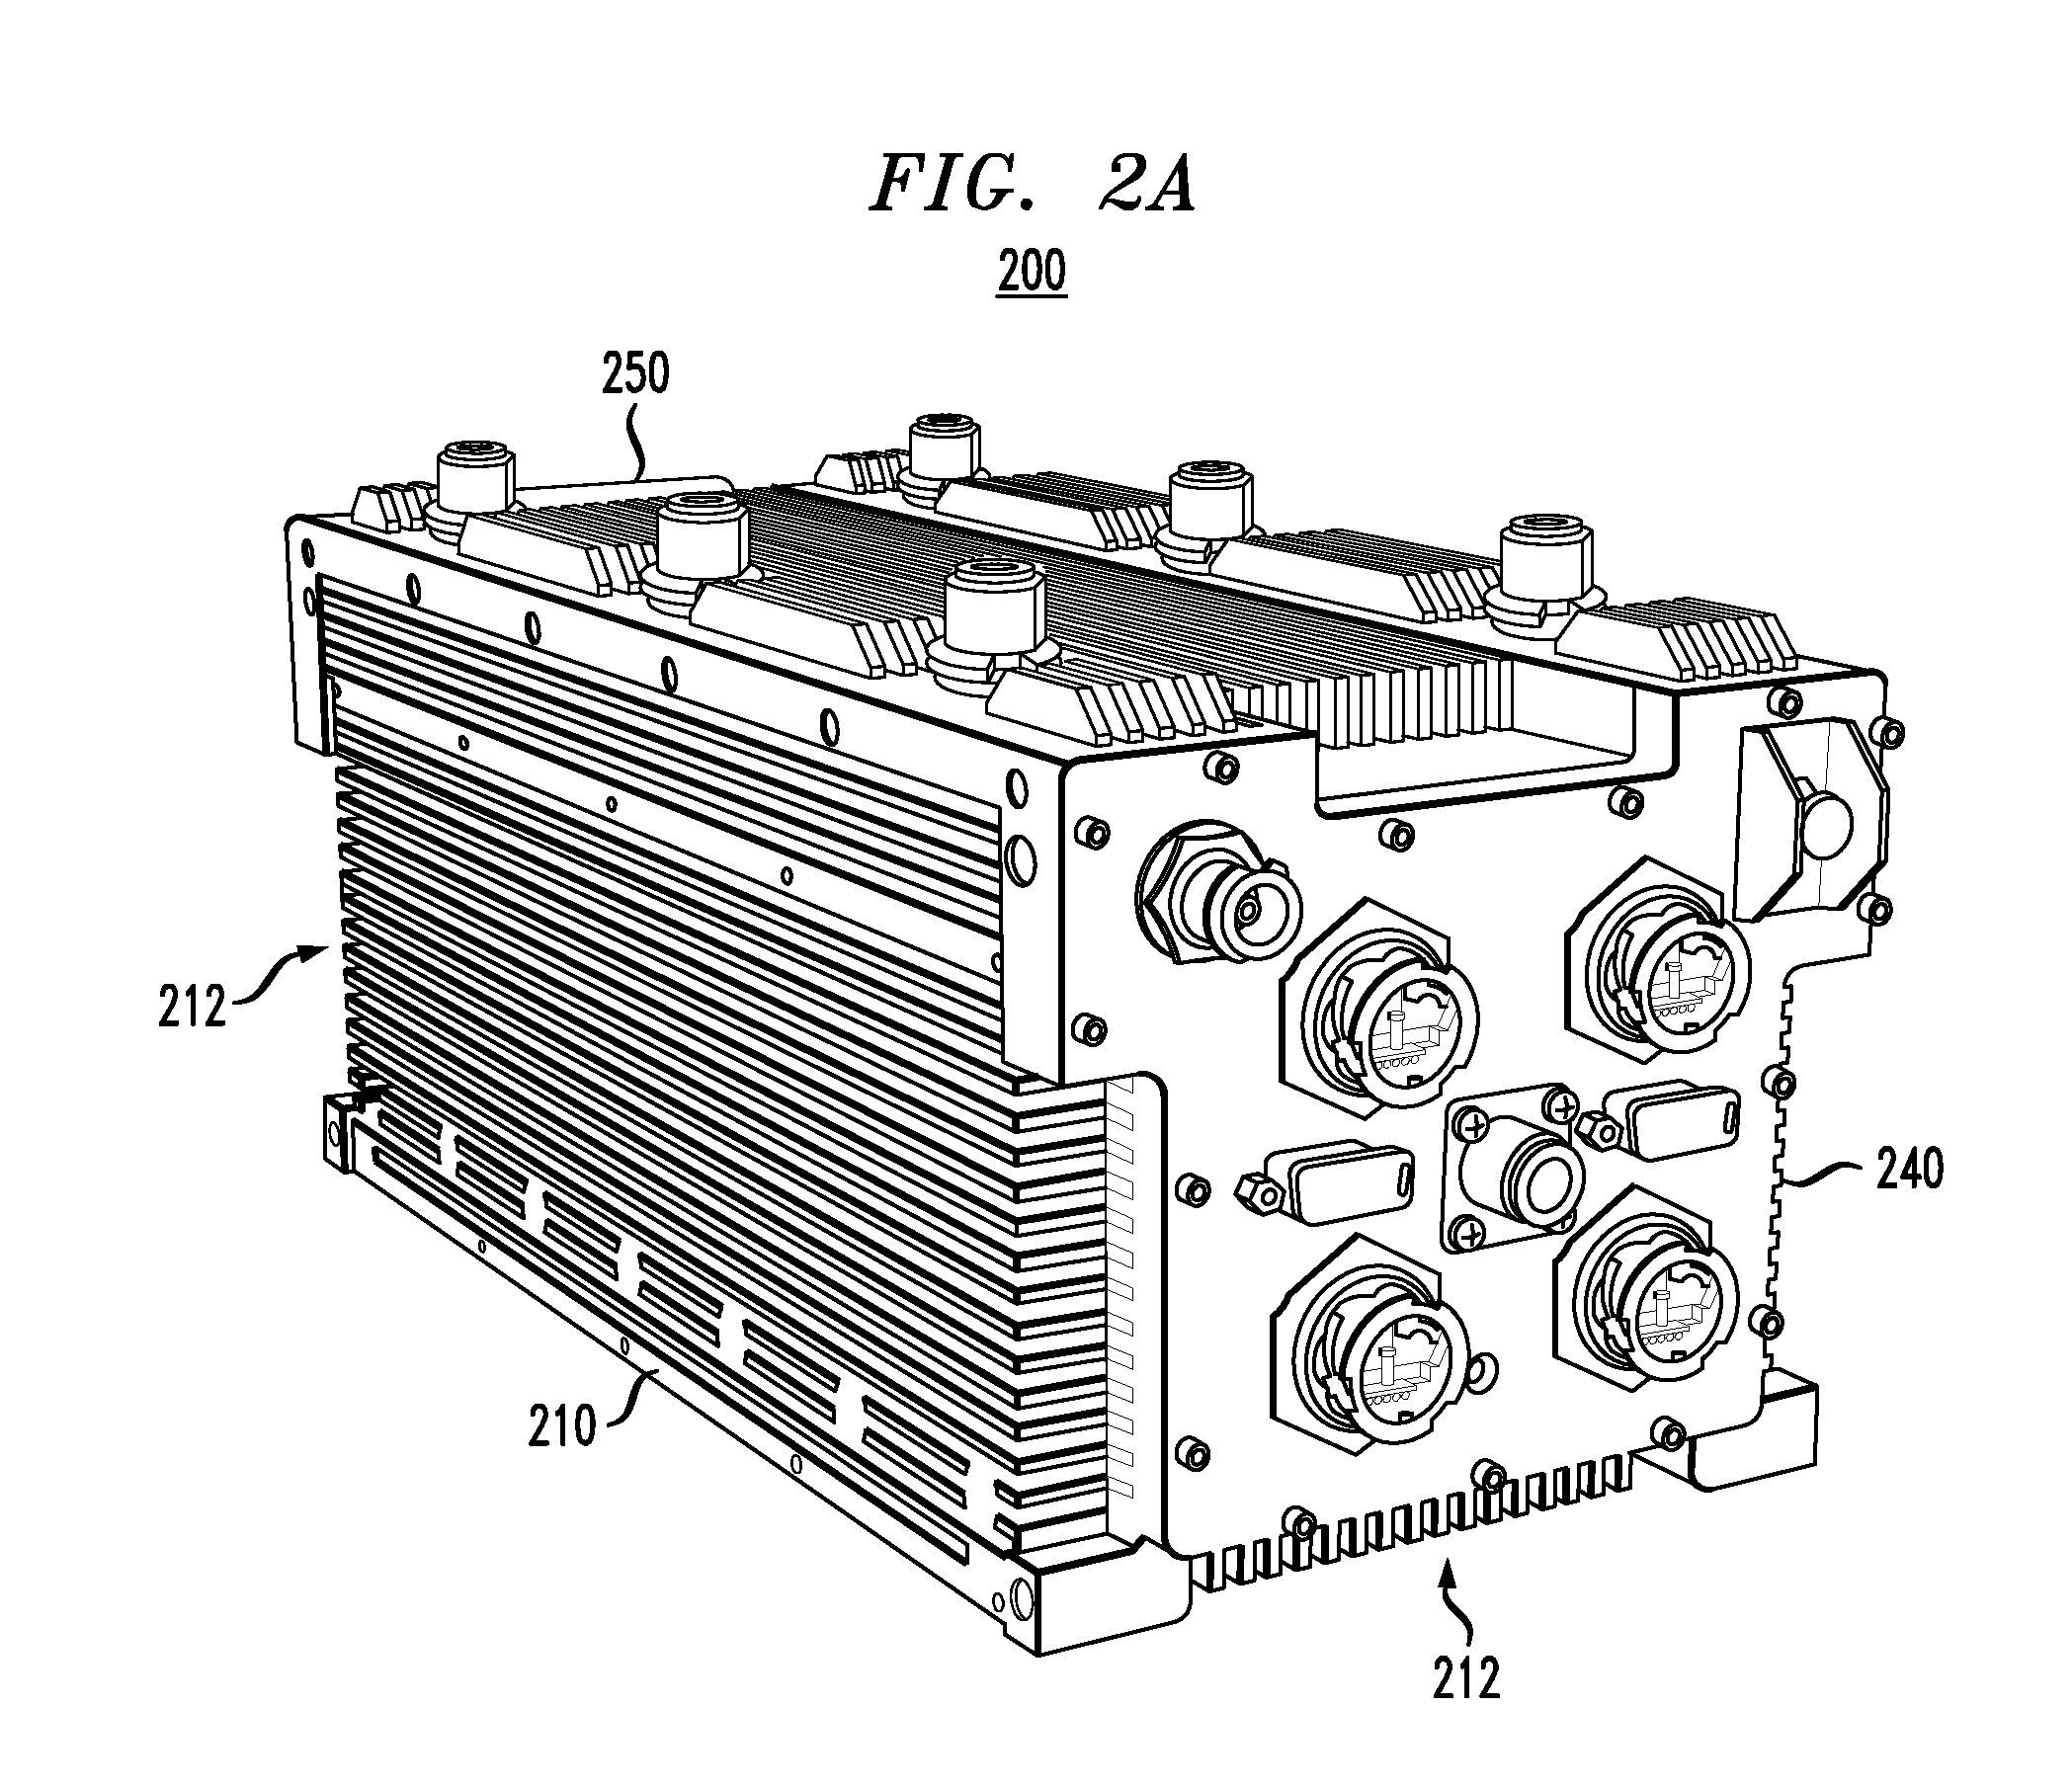 Heat-transfer arrangement for enclosed circuit boards